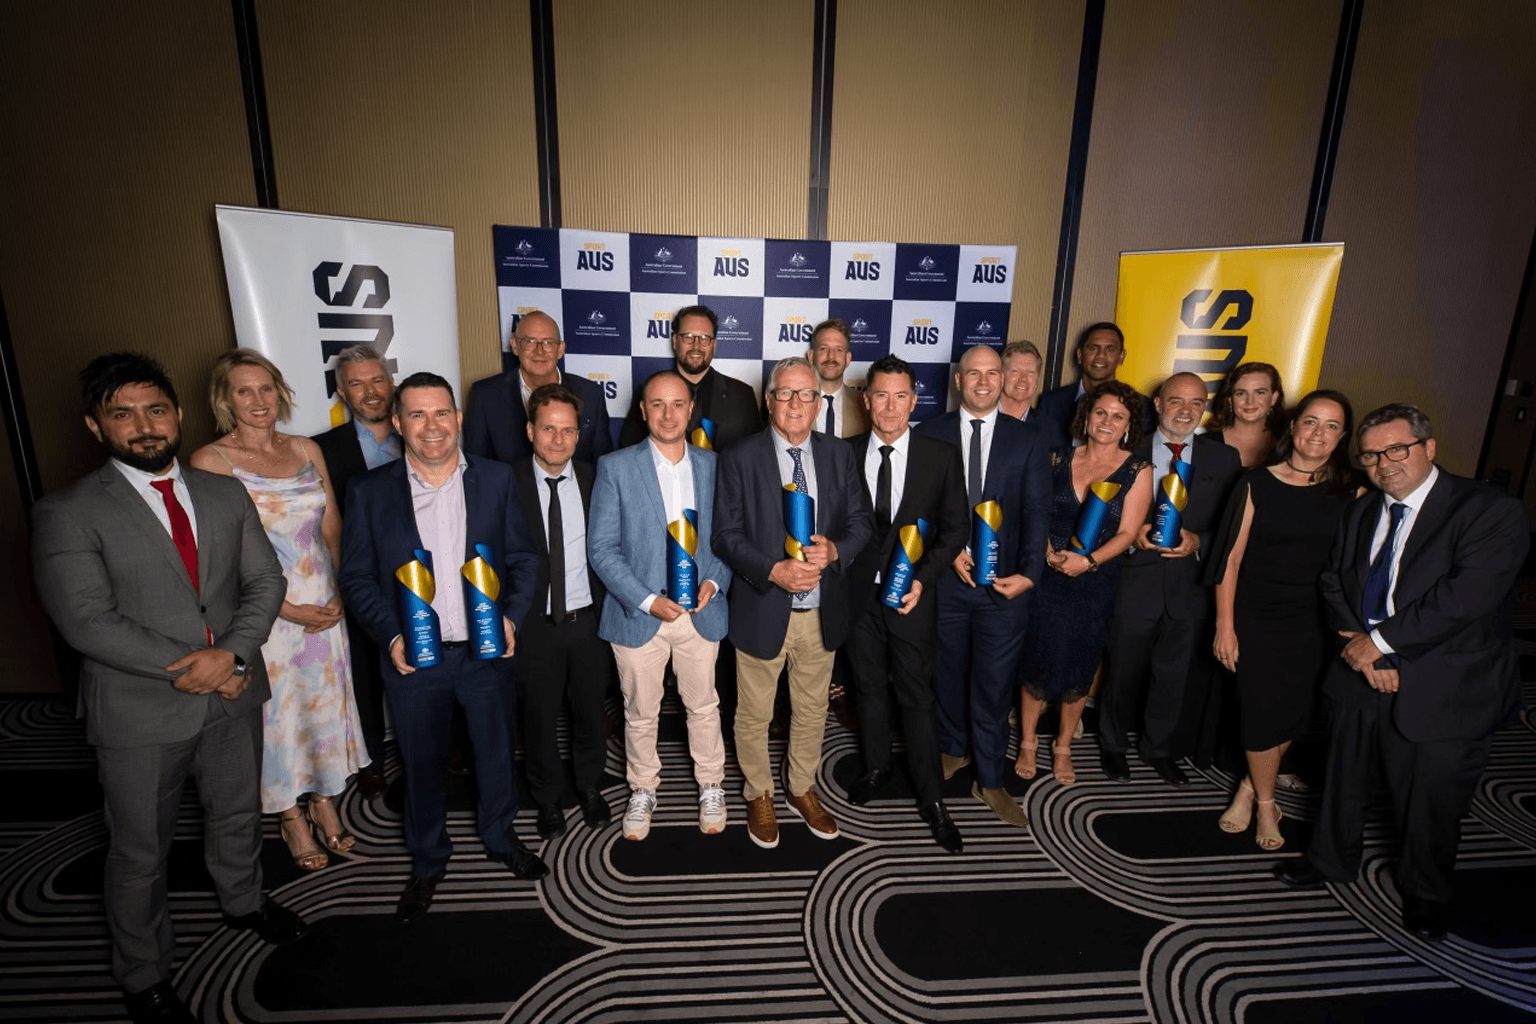 Winners from the 2021 Sport Australia Media Awards